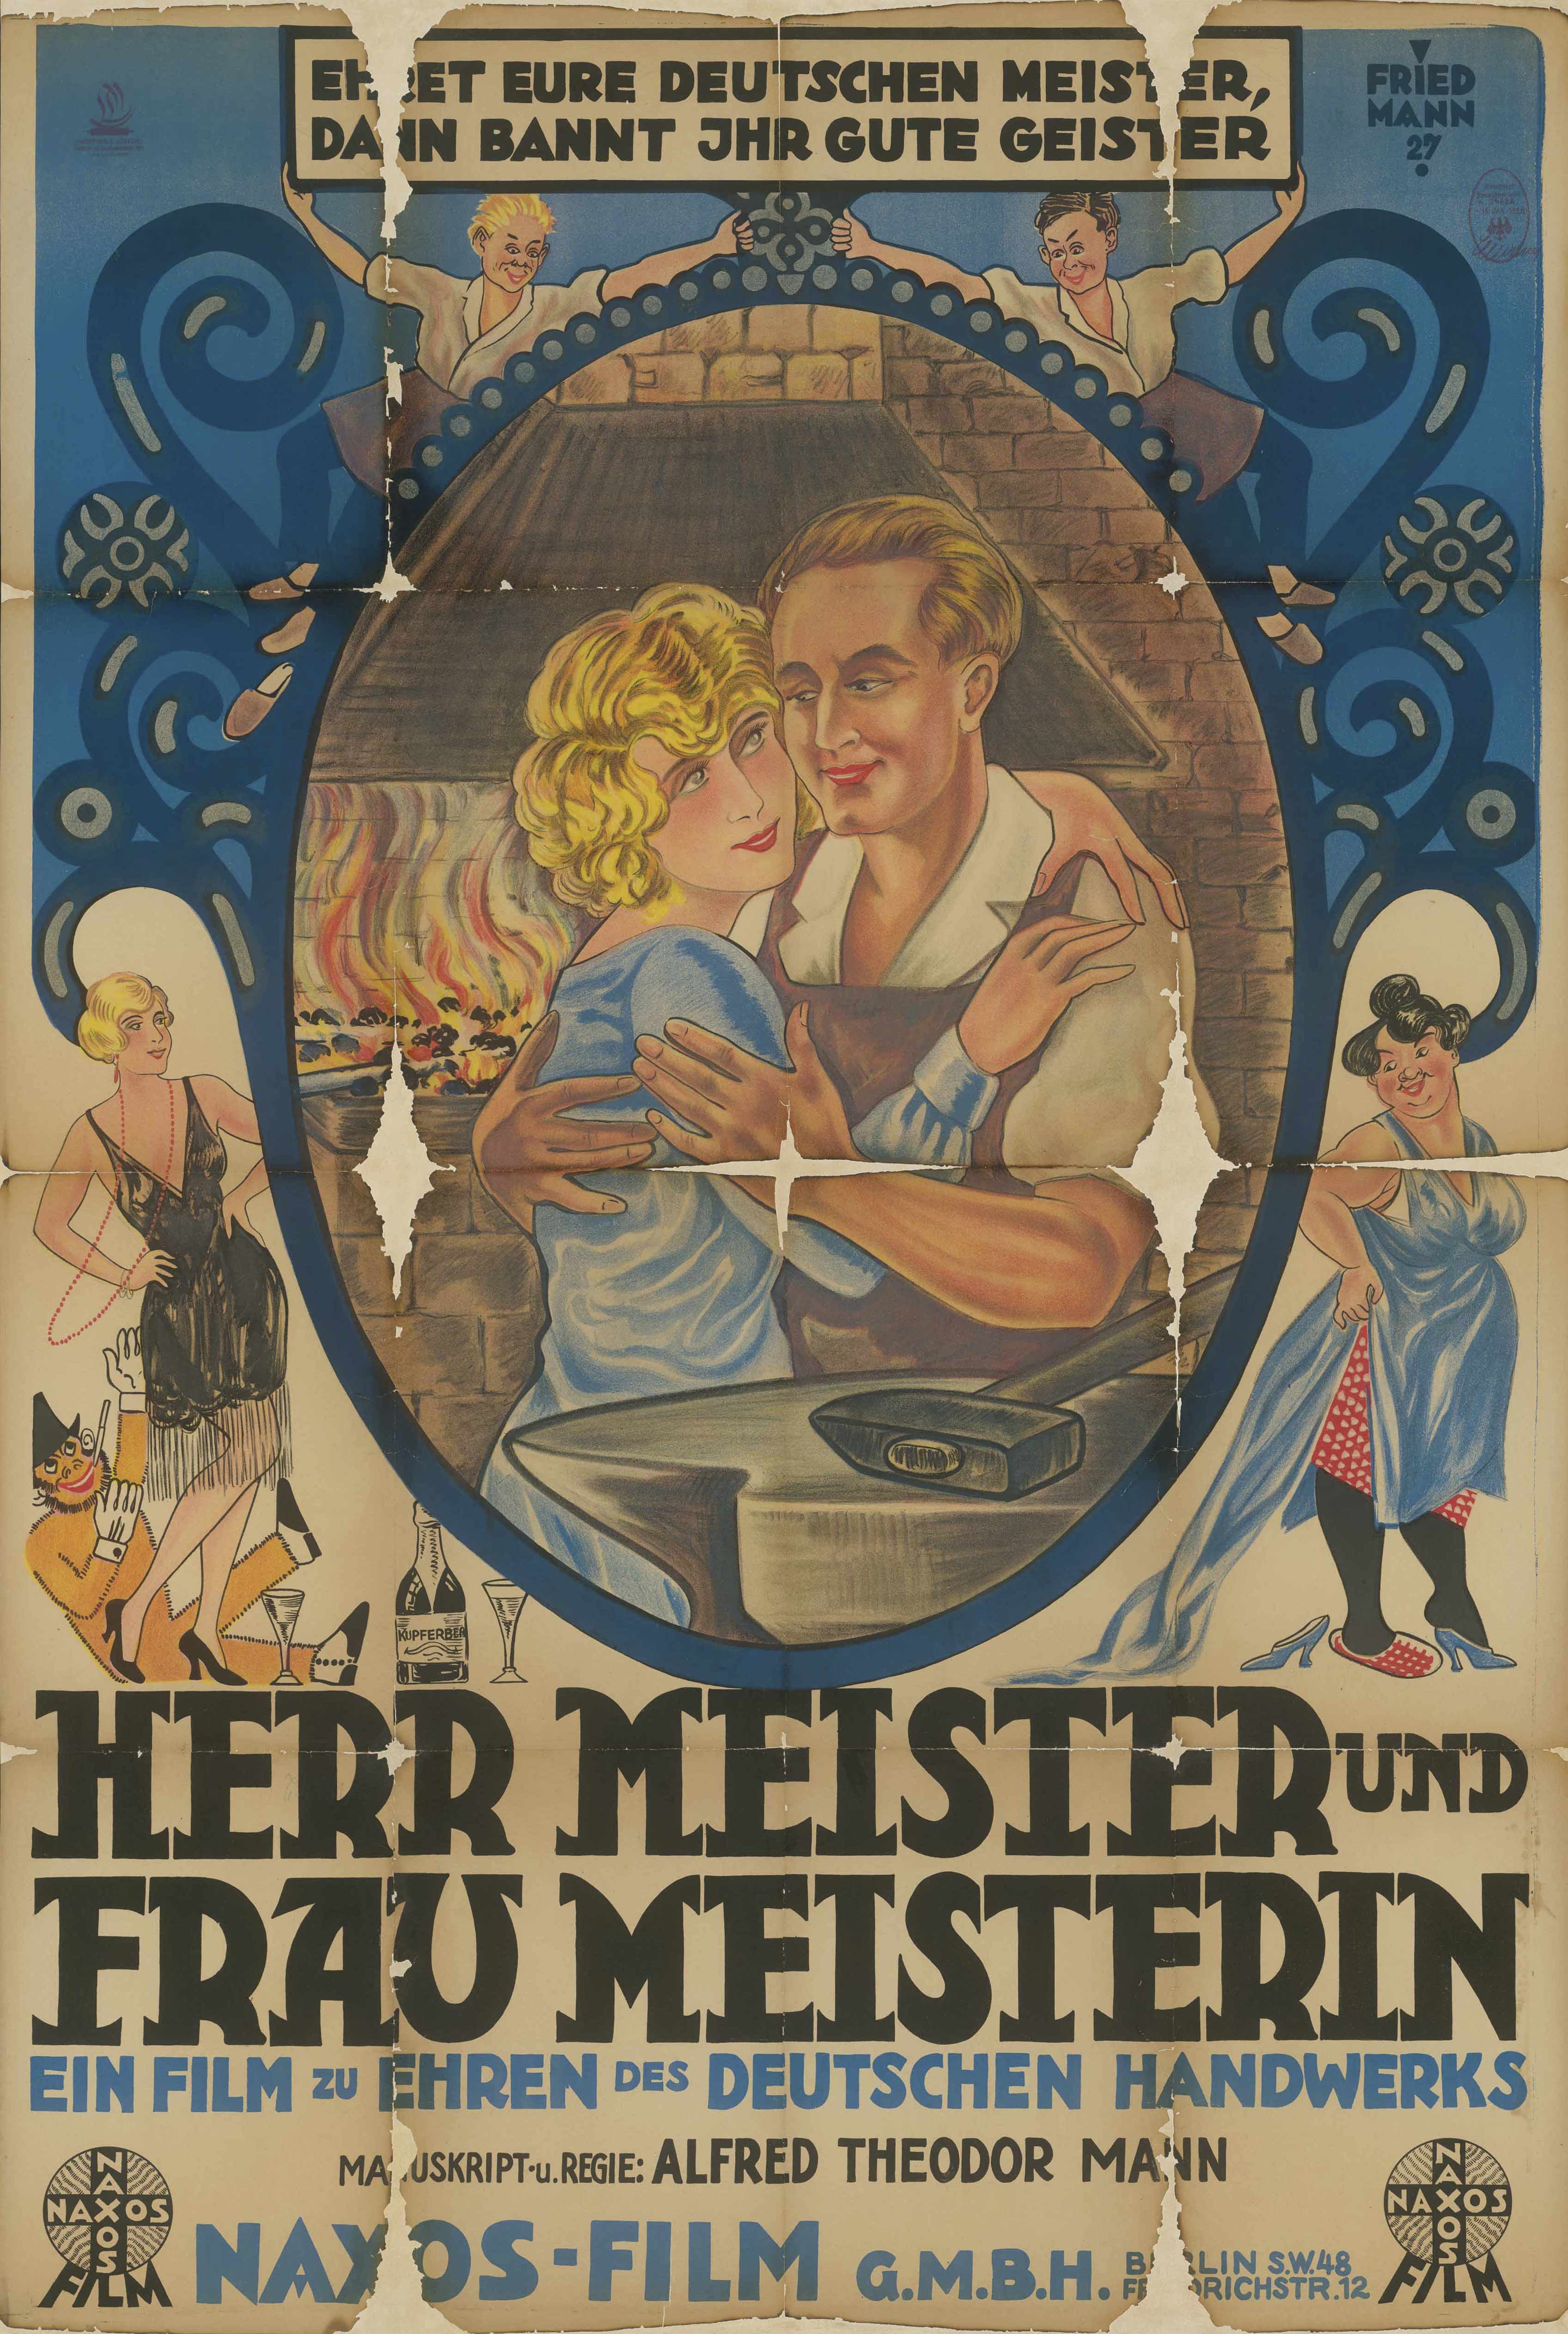 Film poster for Herr Meister und Frau Meisterin, Germany 1928